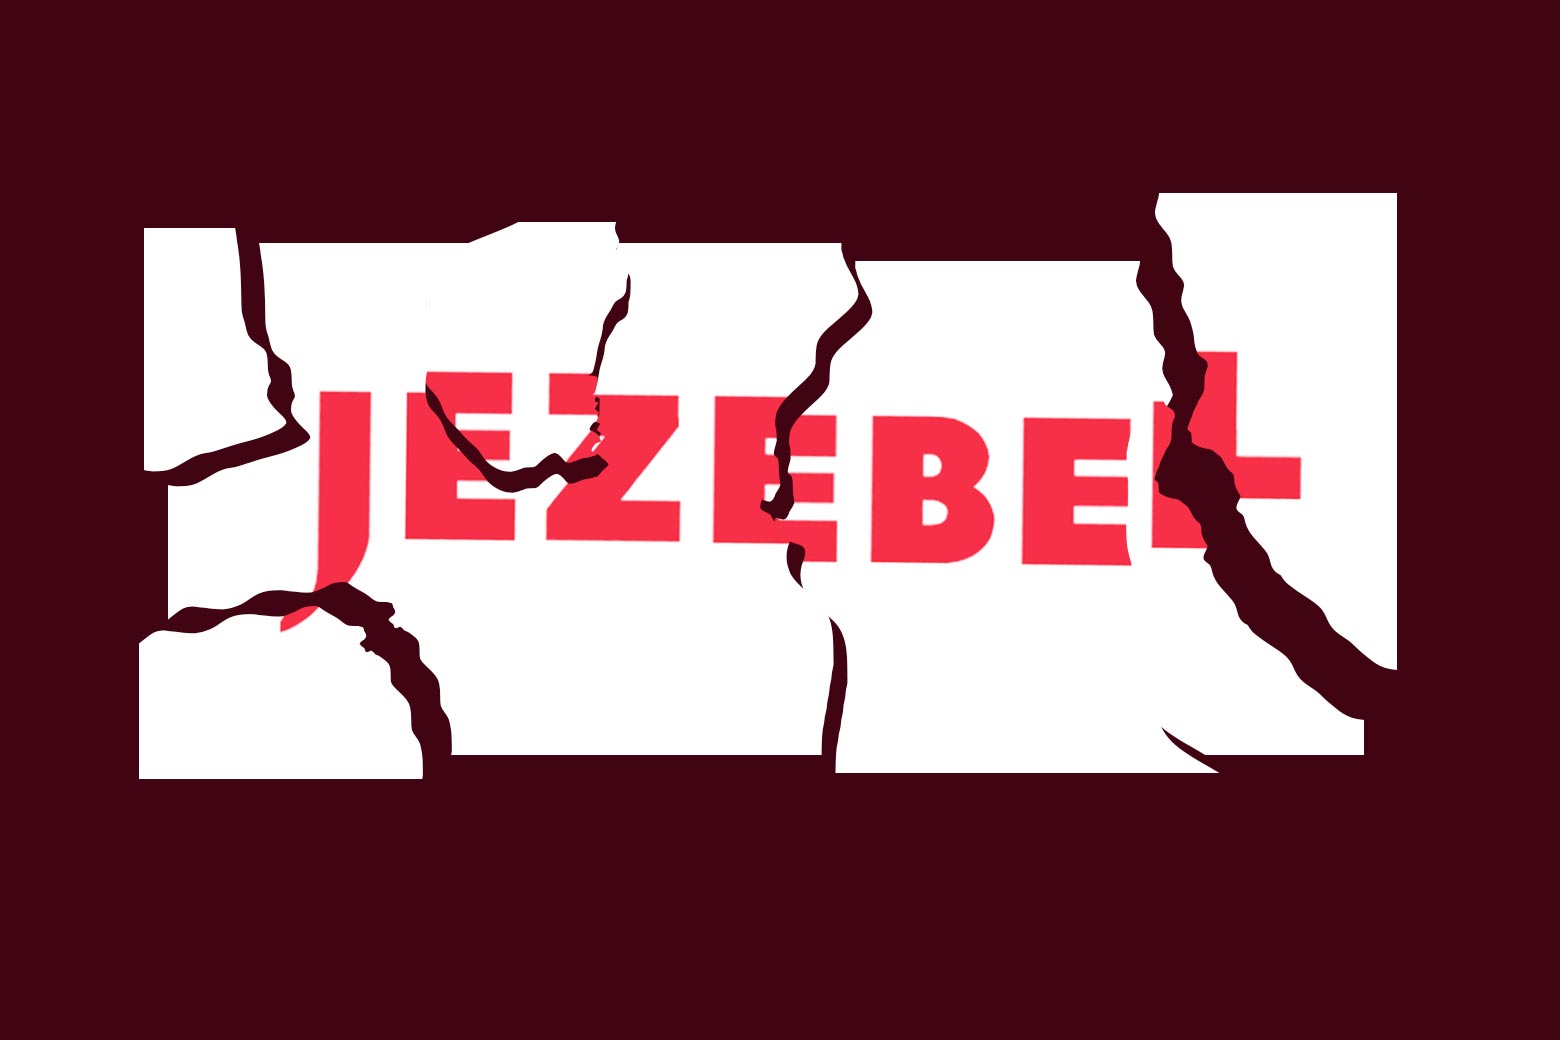 The Jezebel logo, broken up into pieces.